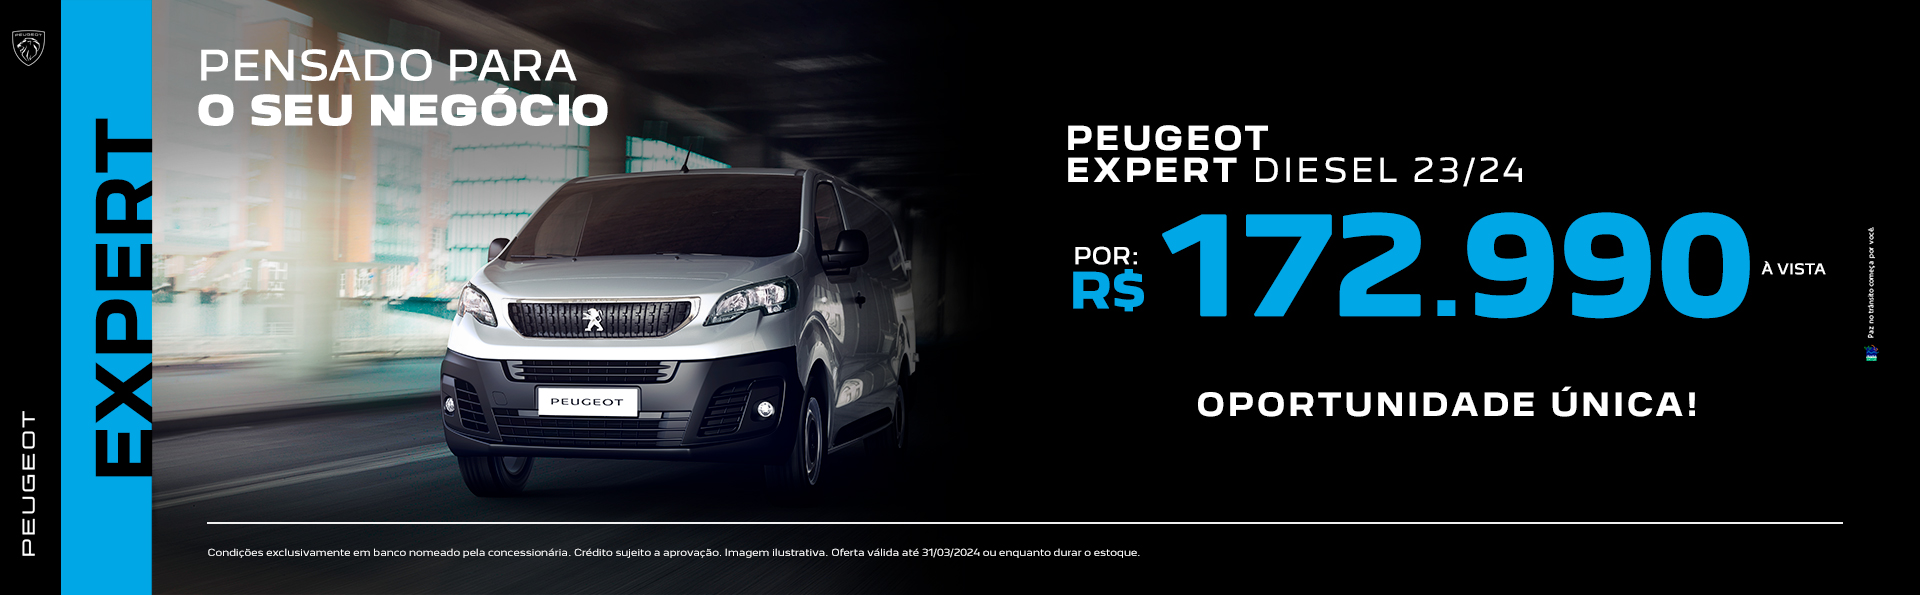 Peugeot Expert Diesel 23/24 por R$172.990,00 à vista na Action Peugeot